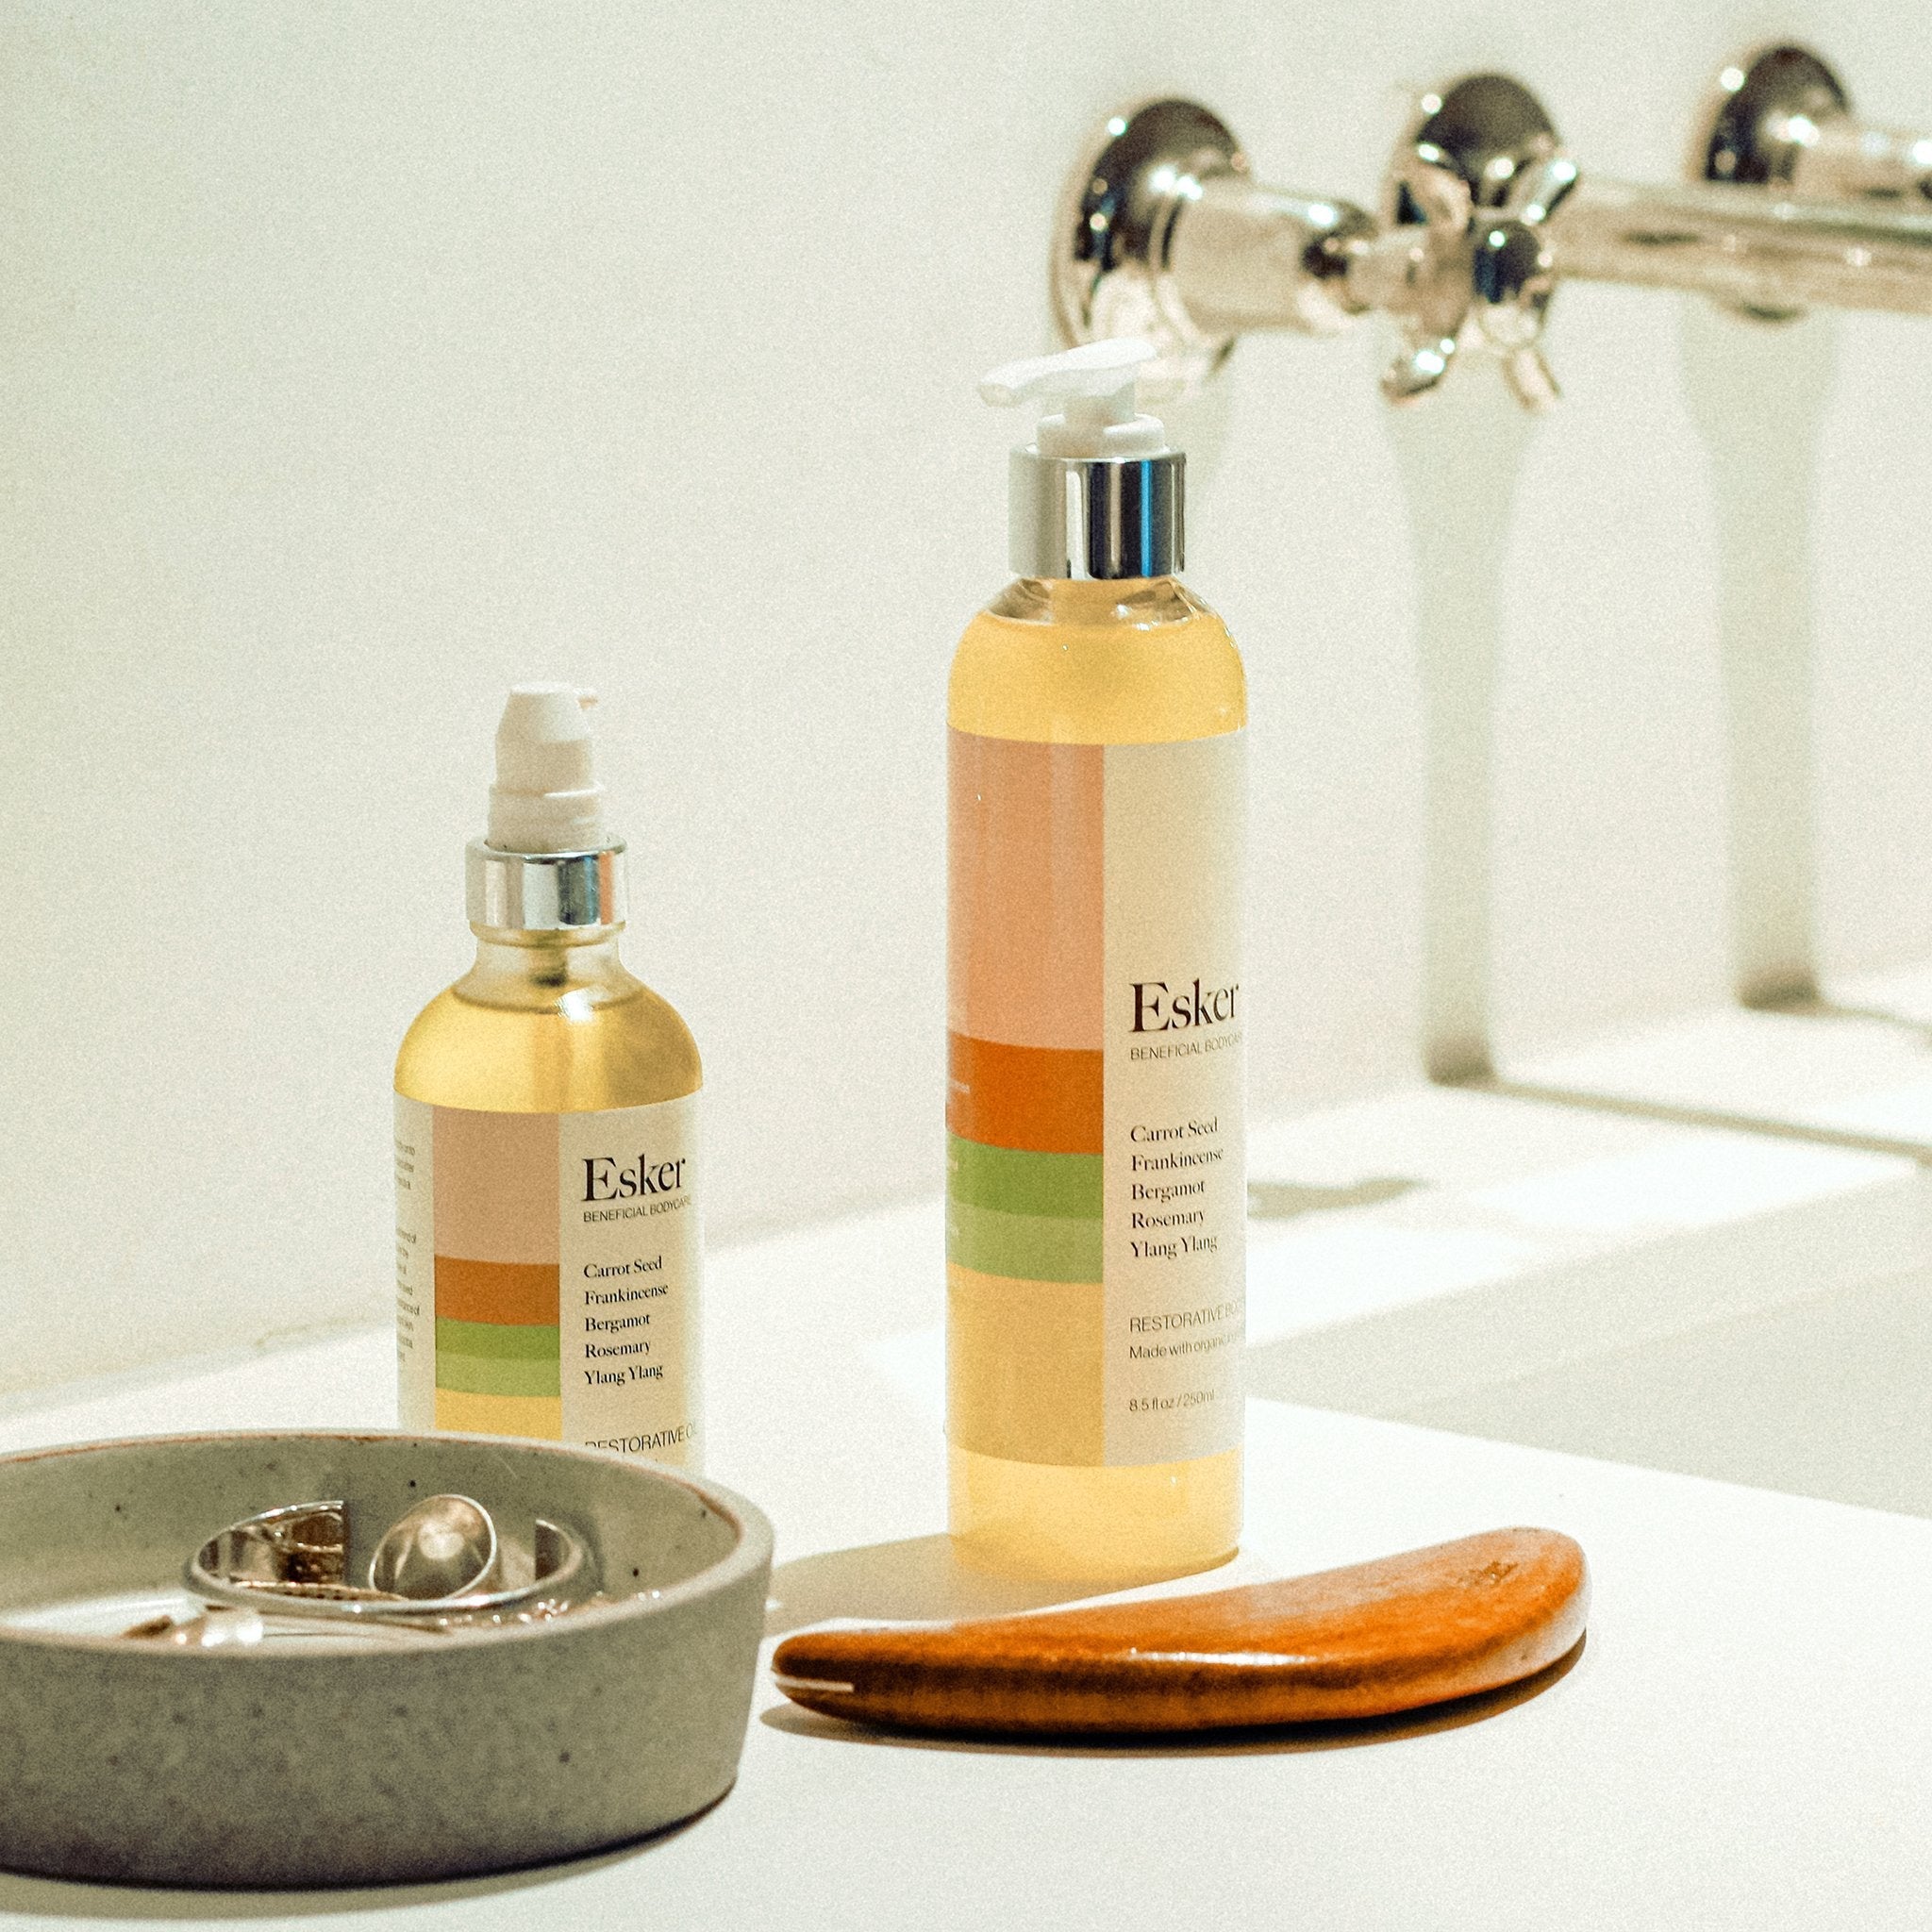  Restorative Body Wash by Esker Esker Perfumarie